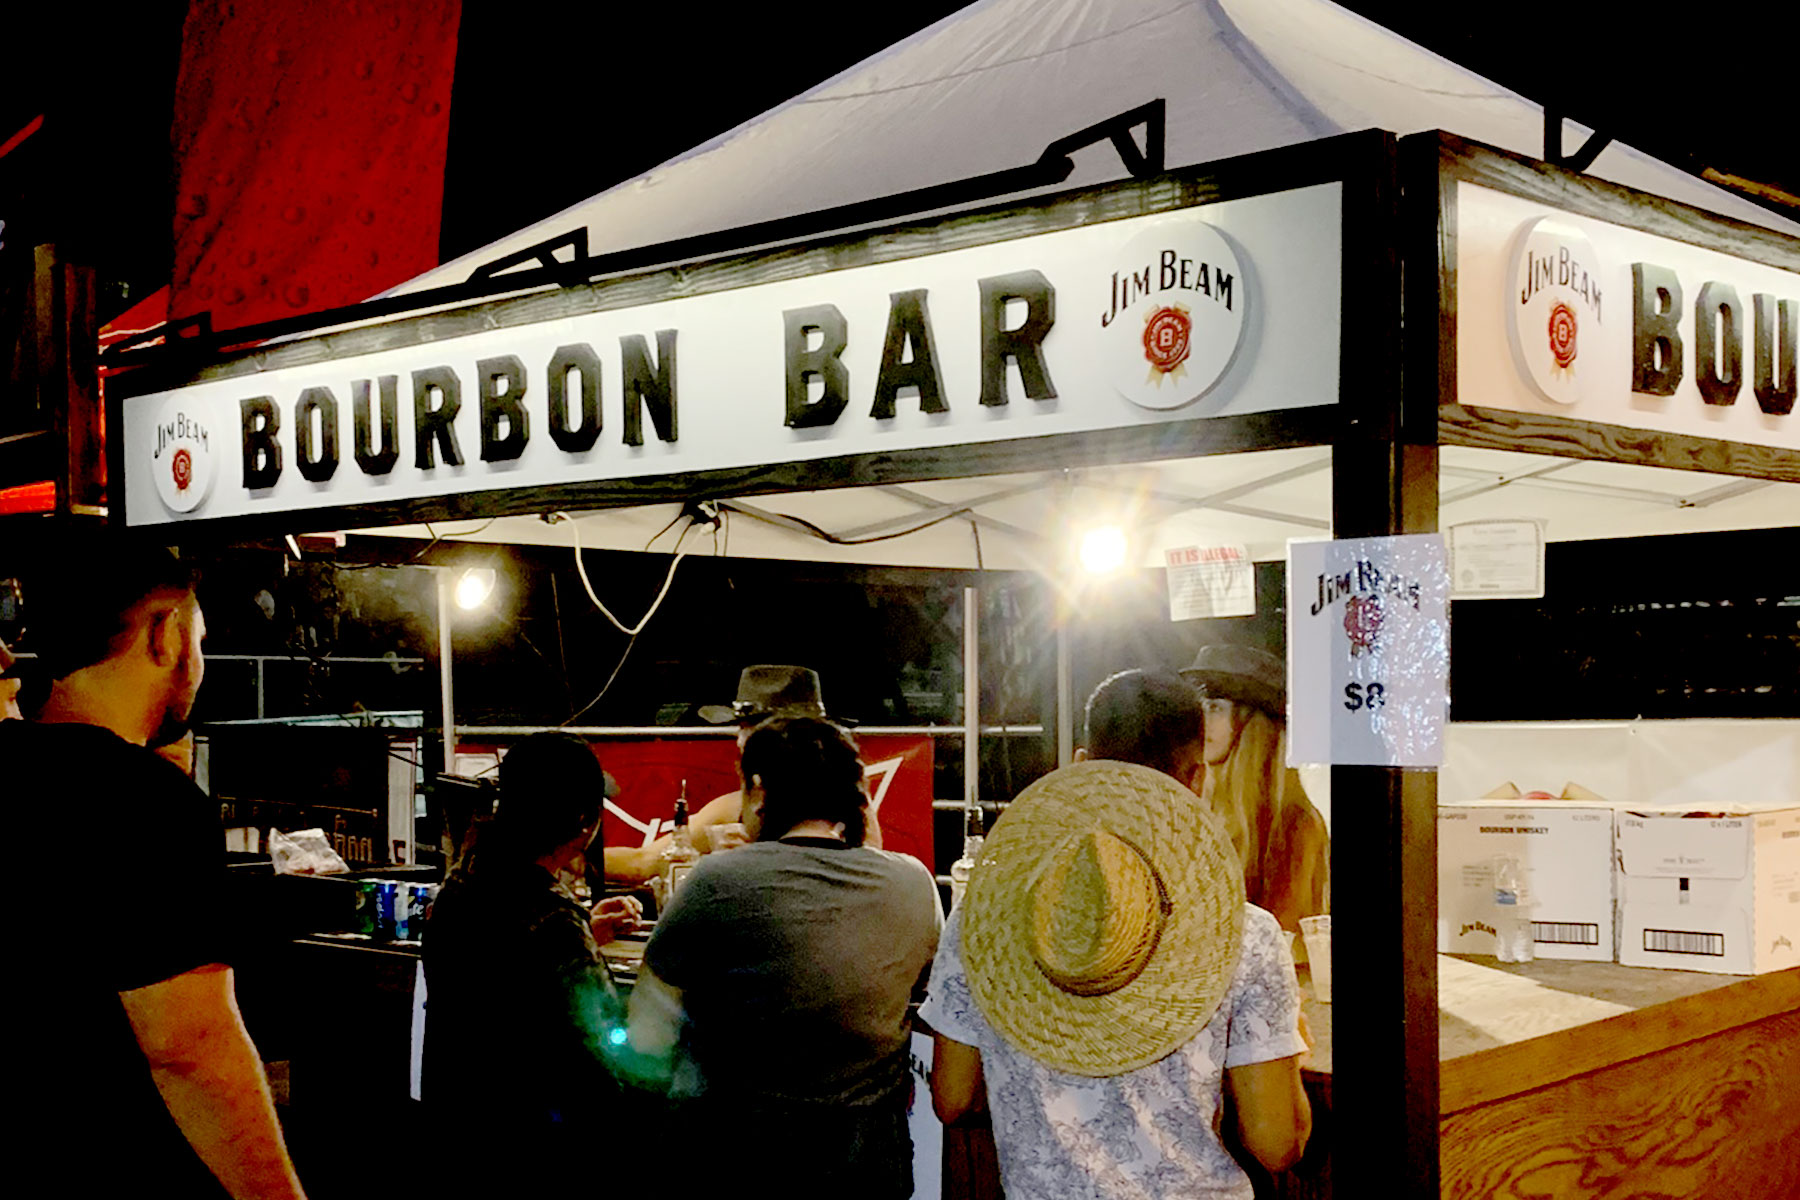 Bourbon Bar lit signage at rodeo